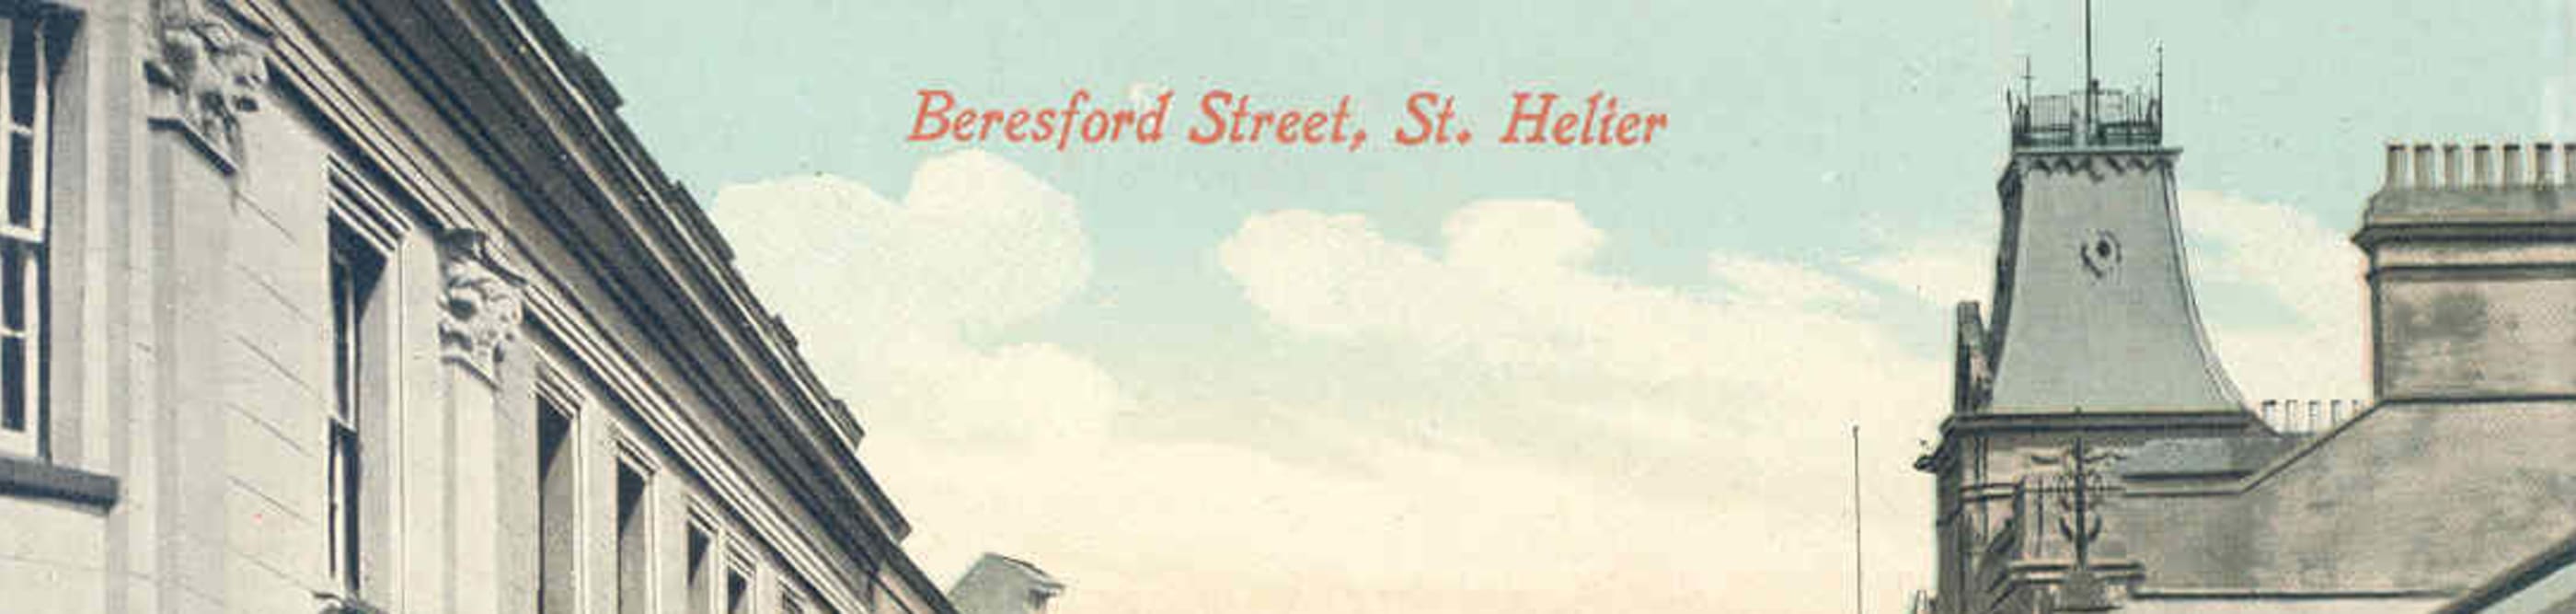 Postcard of a street